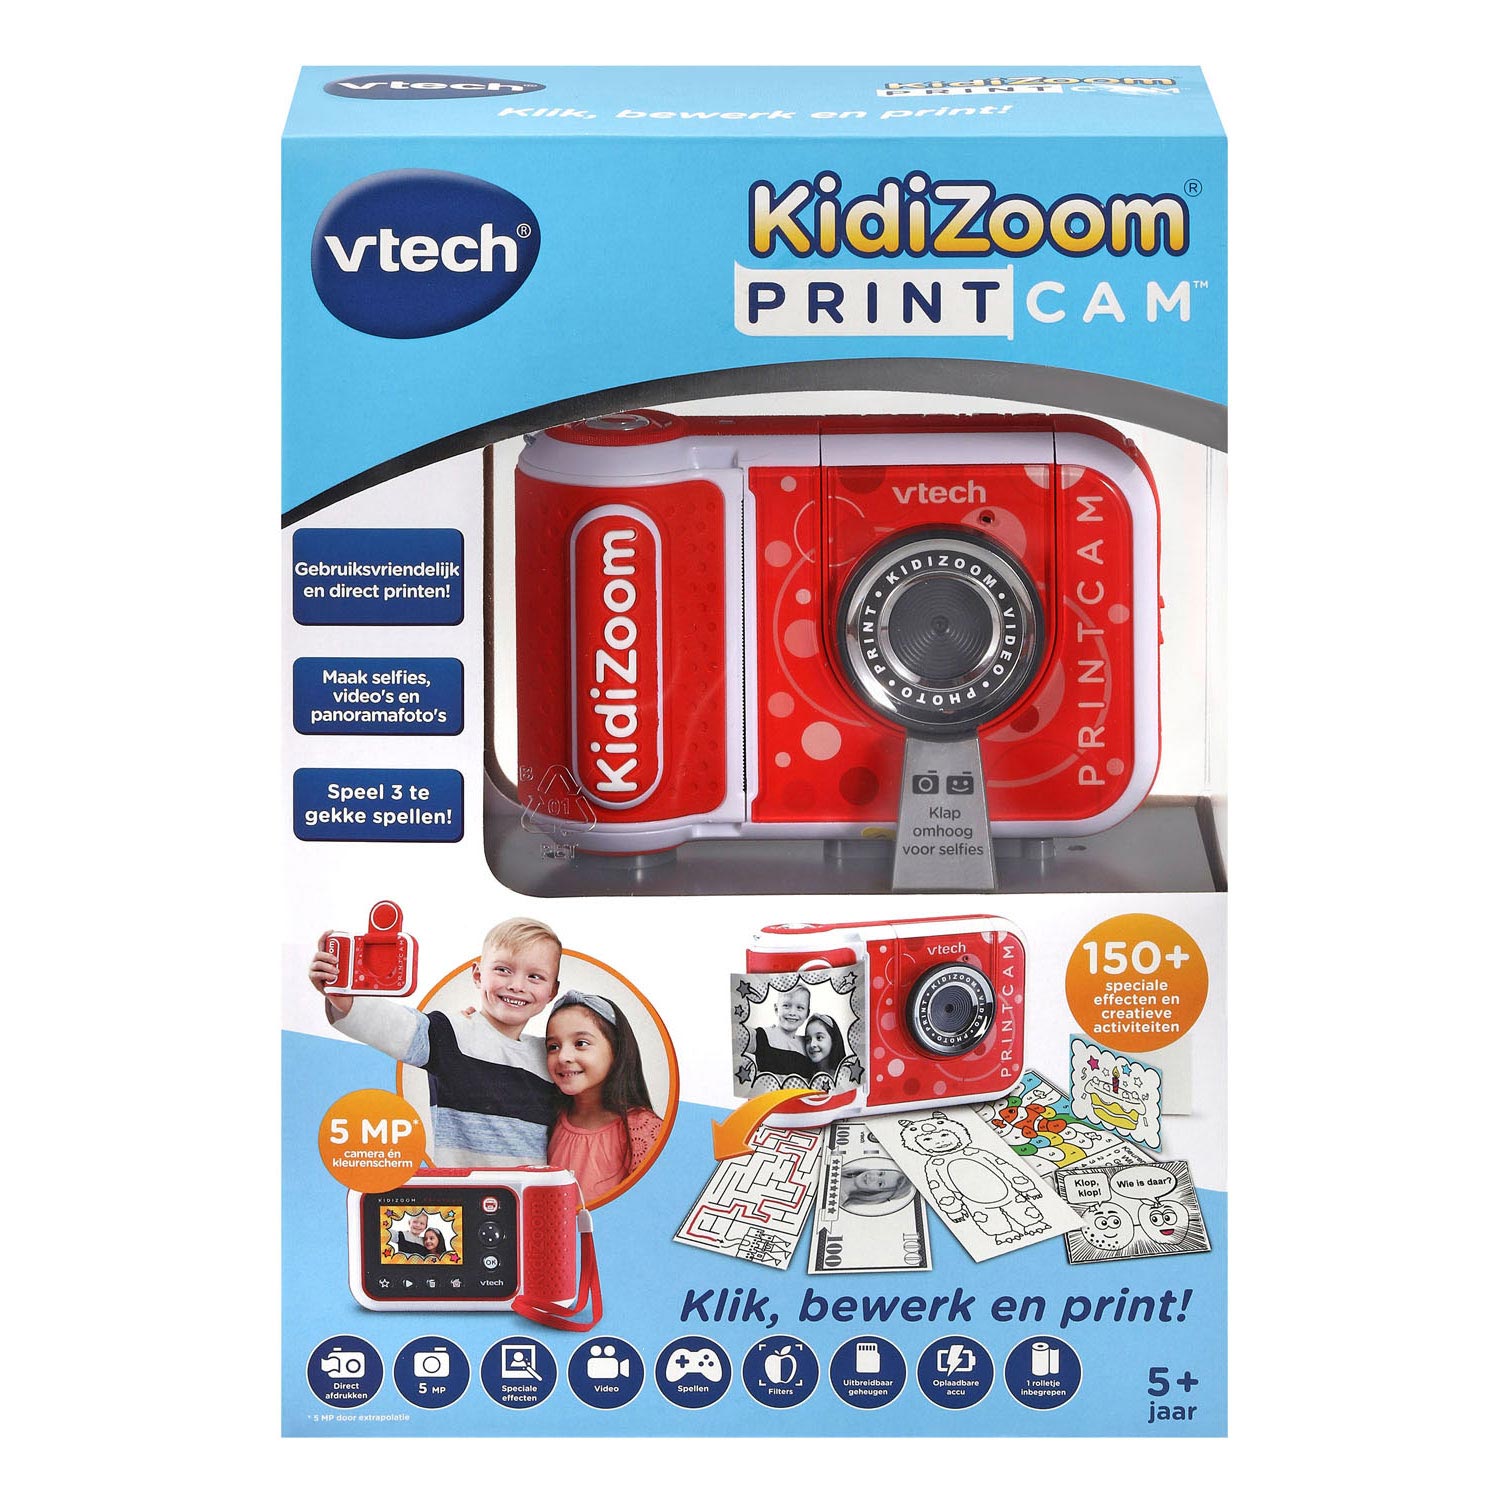 KidiZoom Print Cam V-Tech